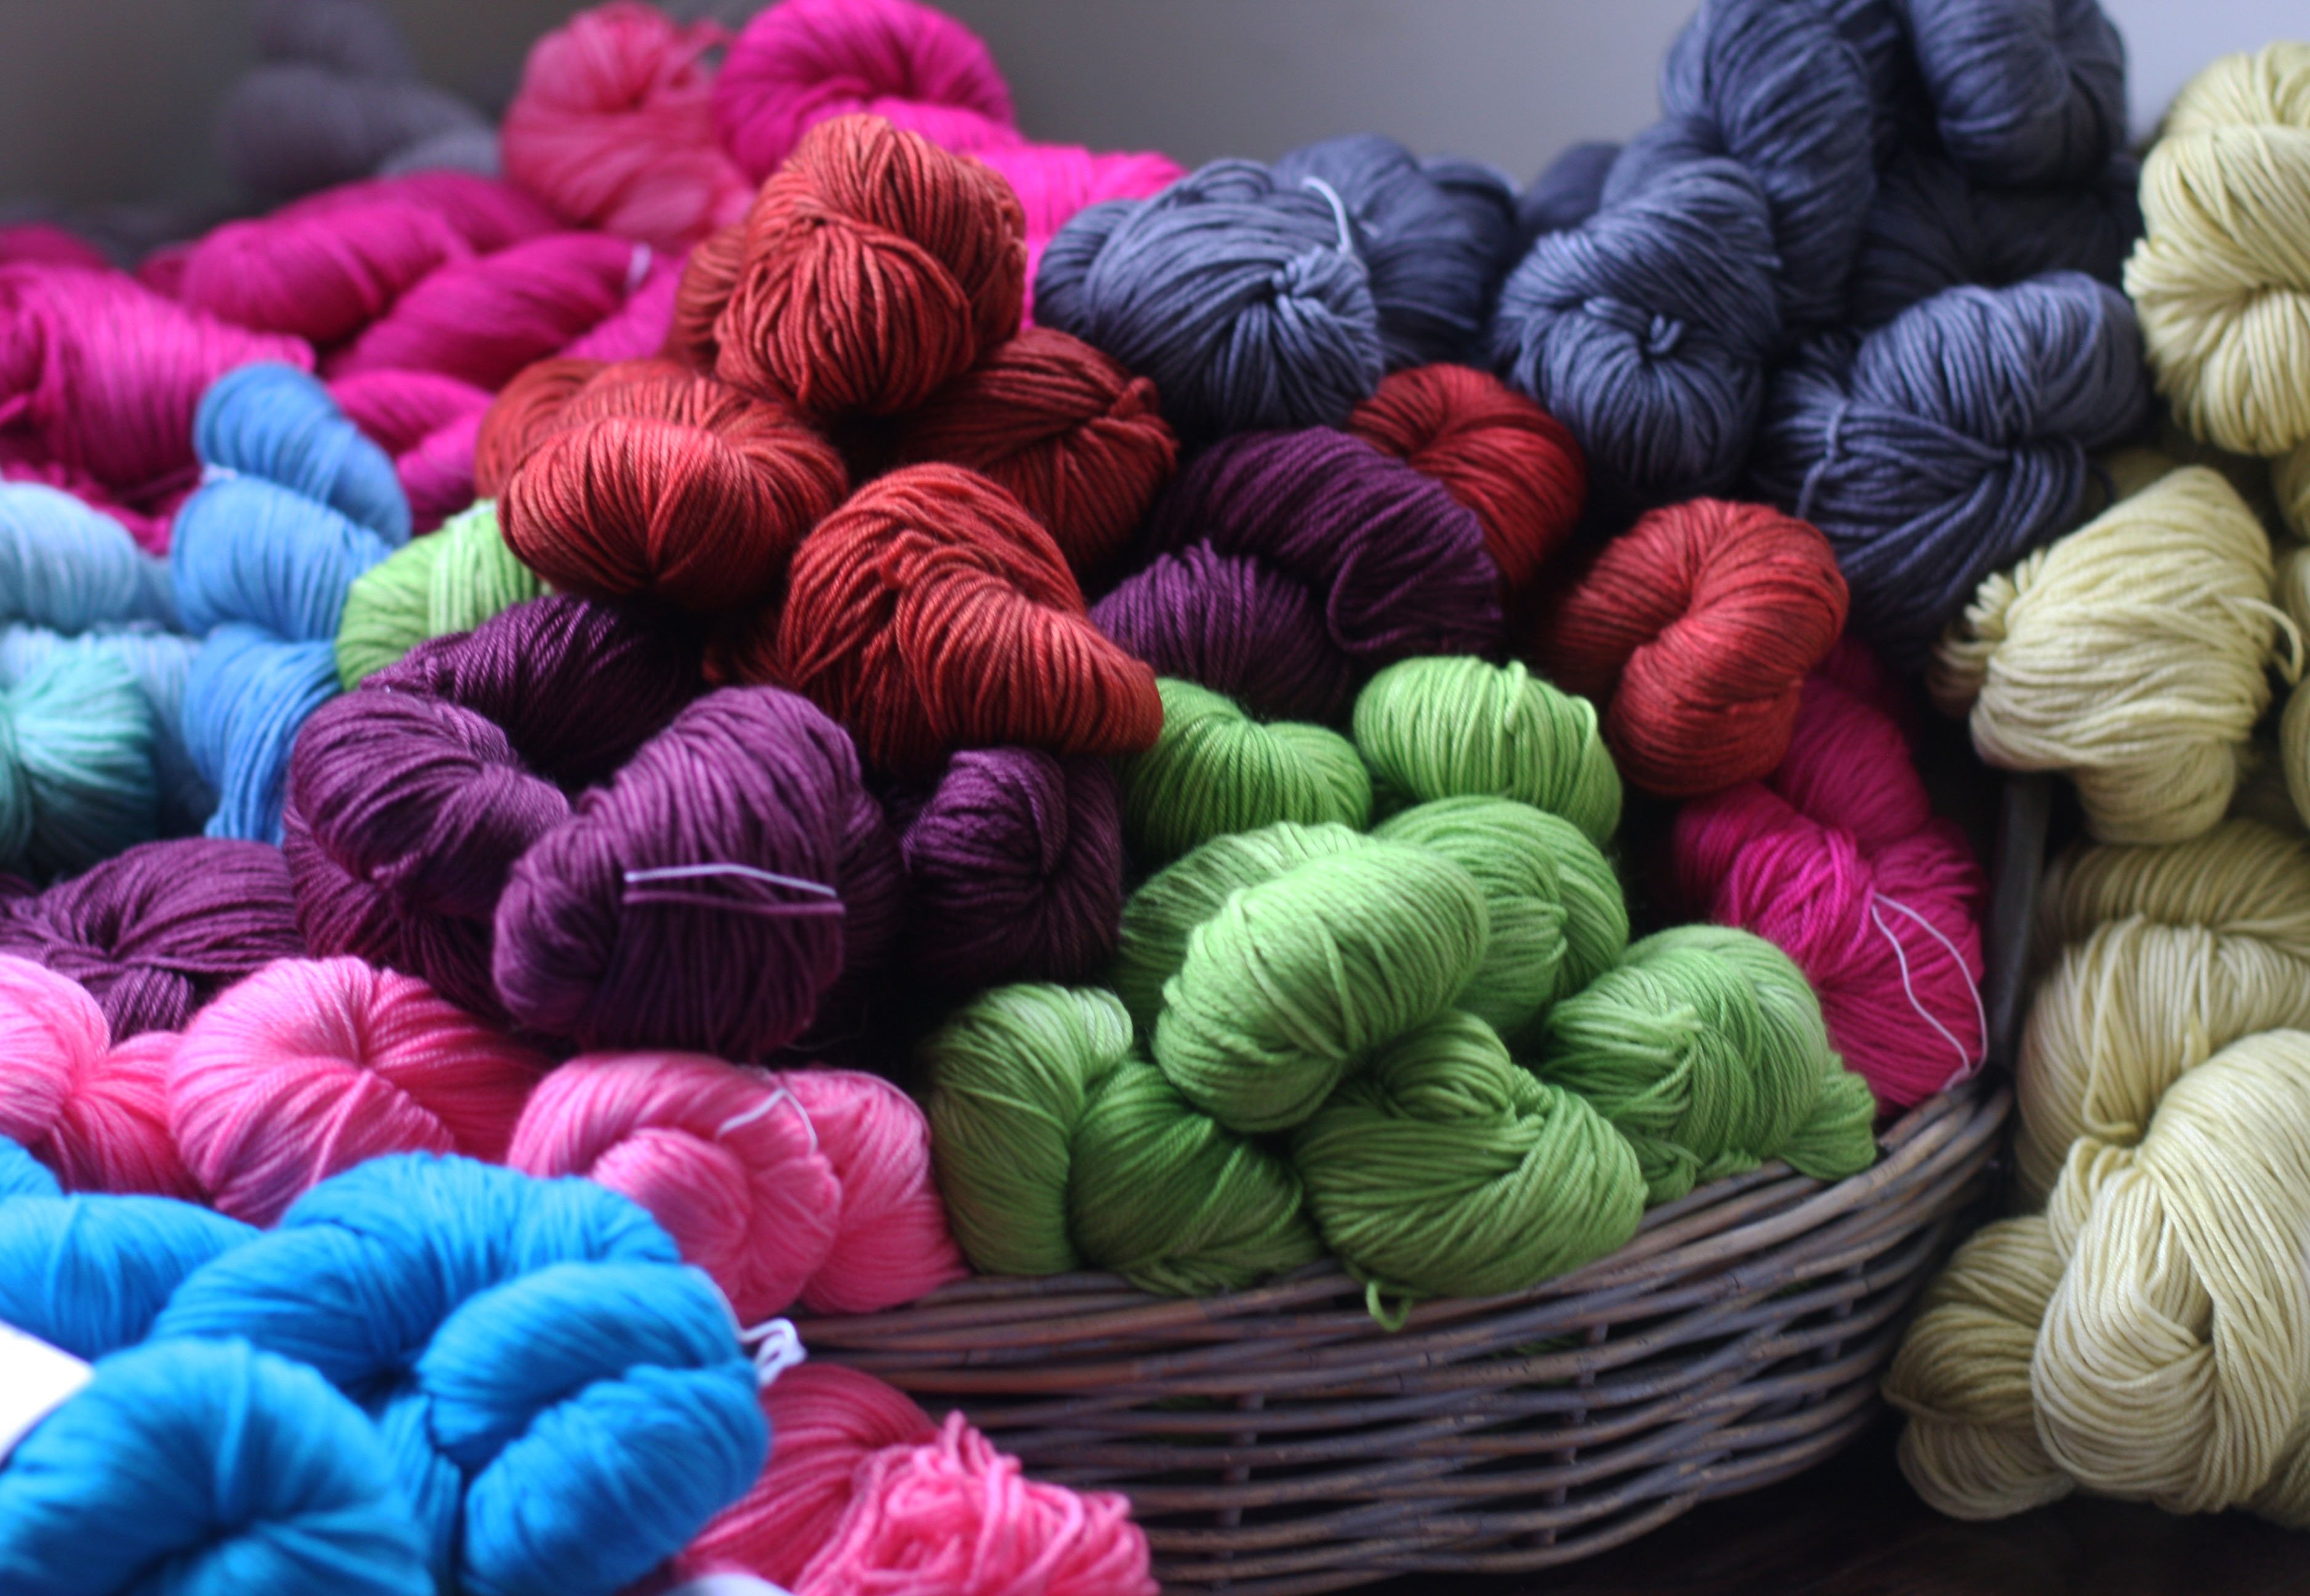 Wool yarn,100% natural, knitting - crochet - craft 